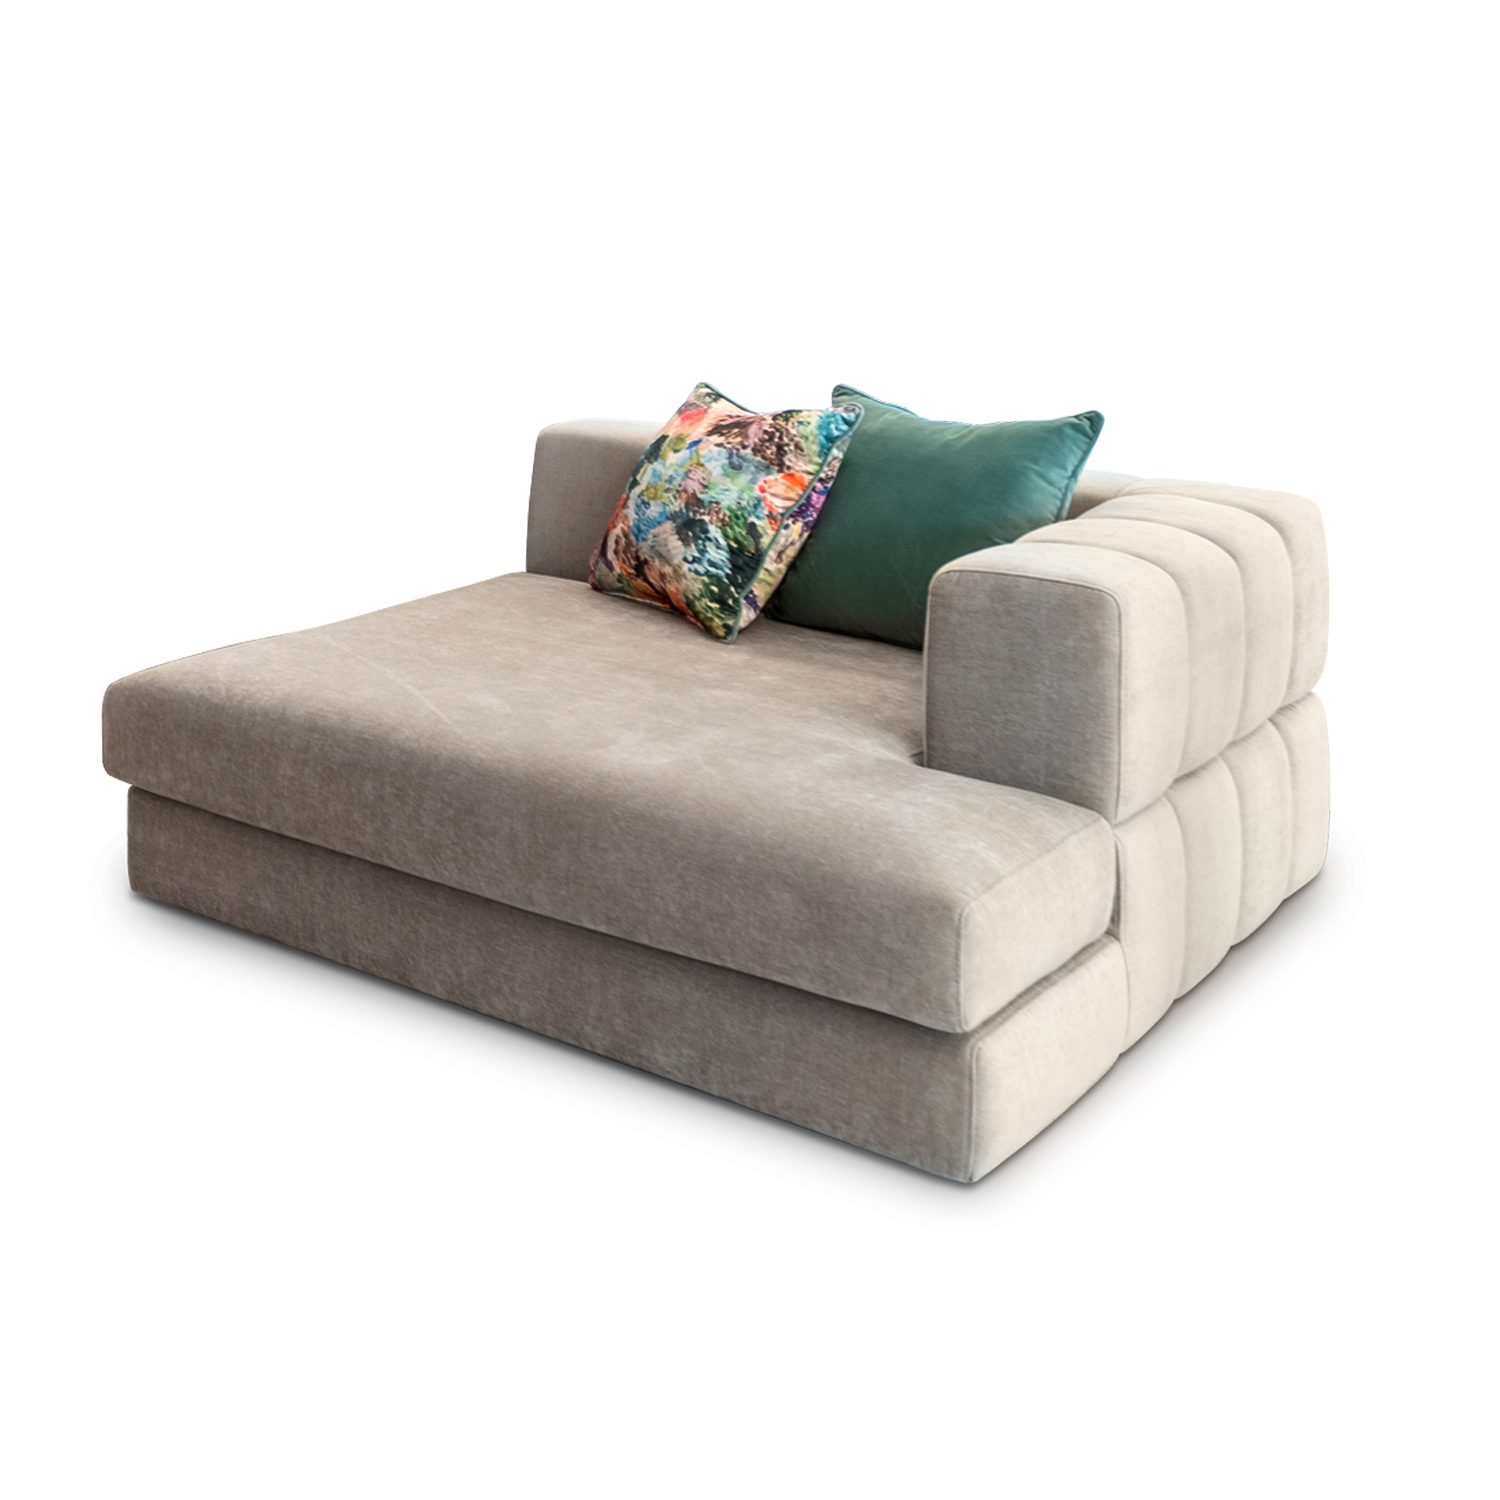 Bespoke modular sofa Benedita | Project Source